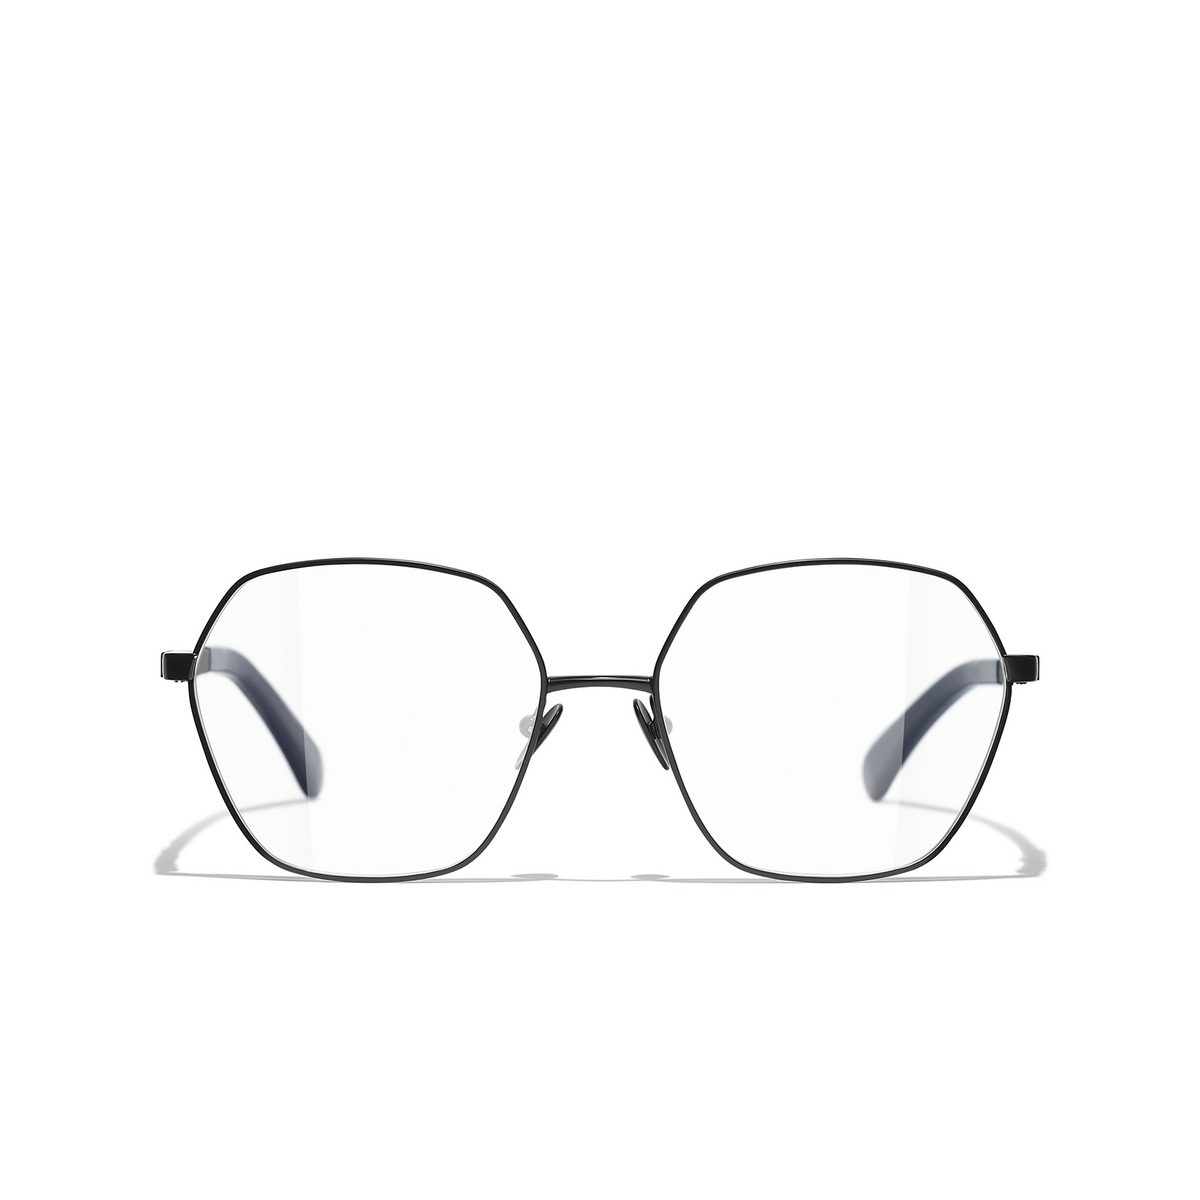 CHANEL round Eyeglasses C170 Black - front view